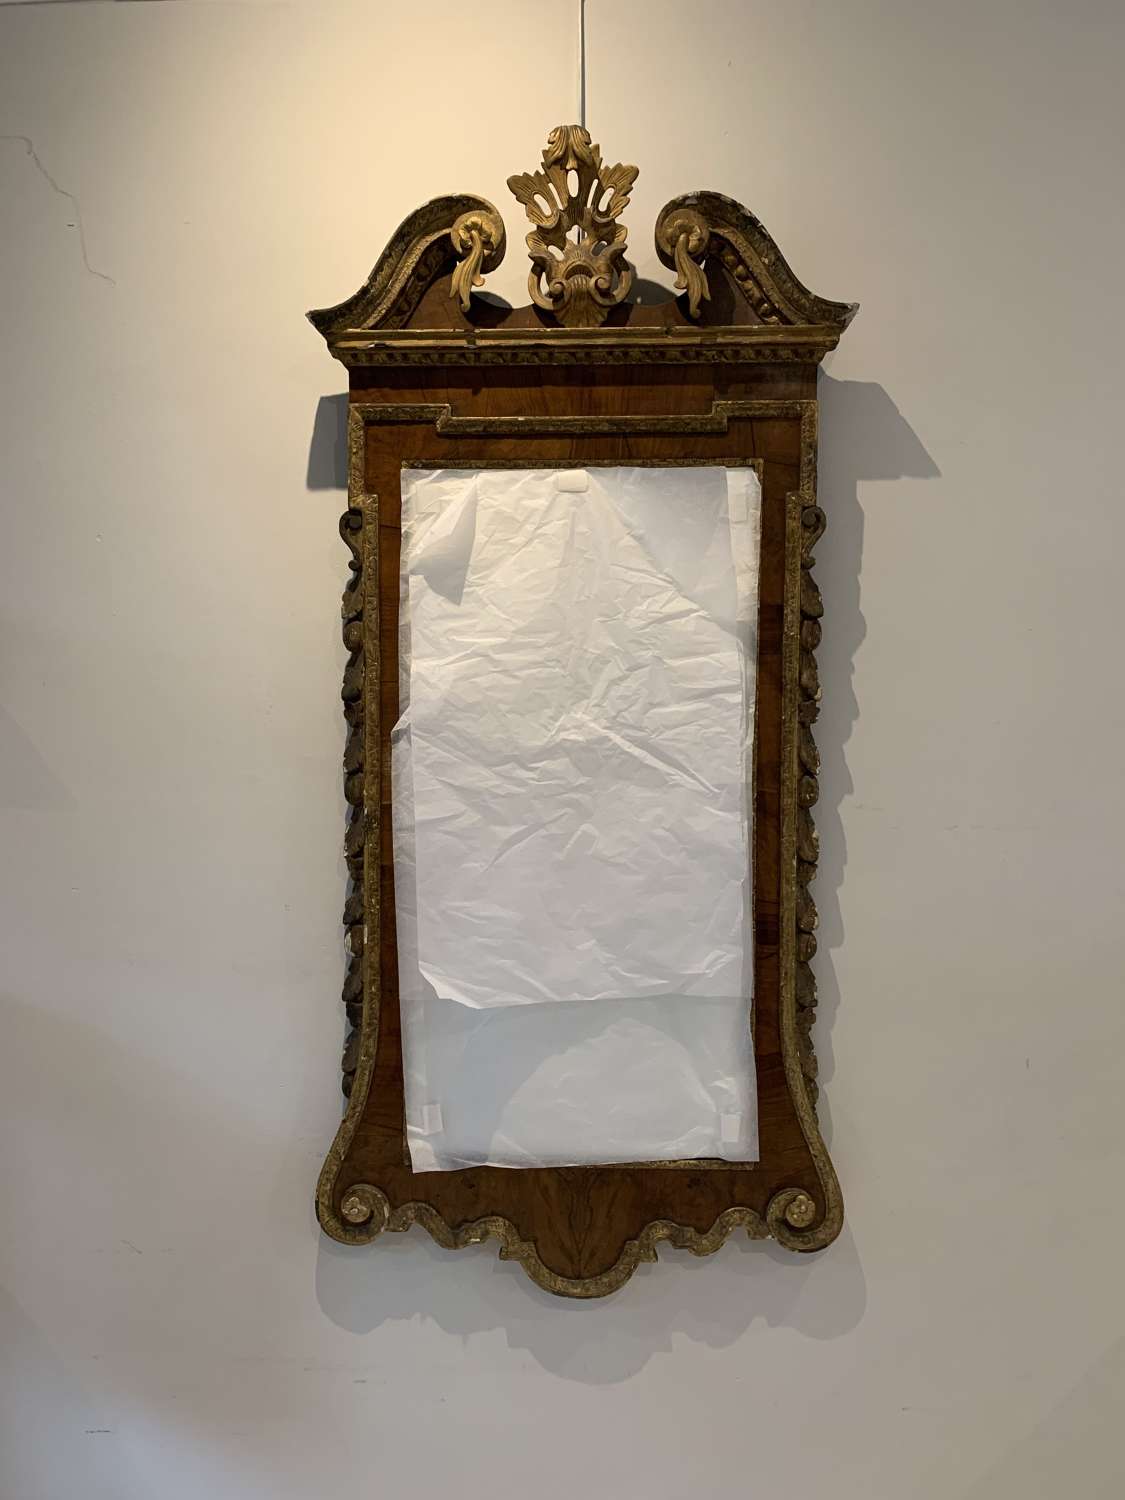 Circa 1780 burr walnut & gilt Irish mirror by Jackson of Dublin